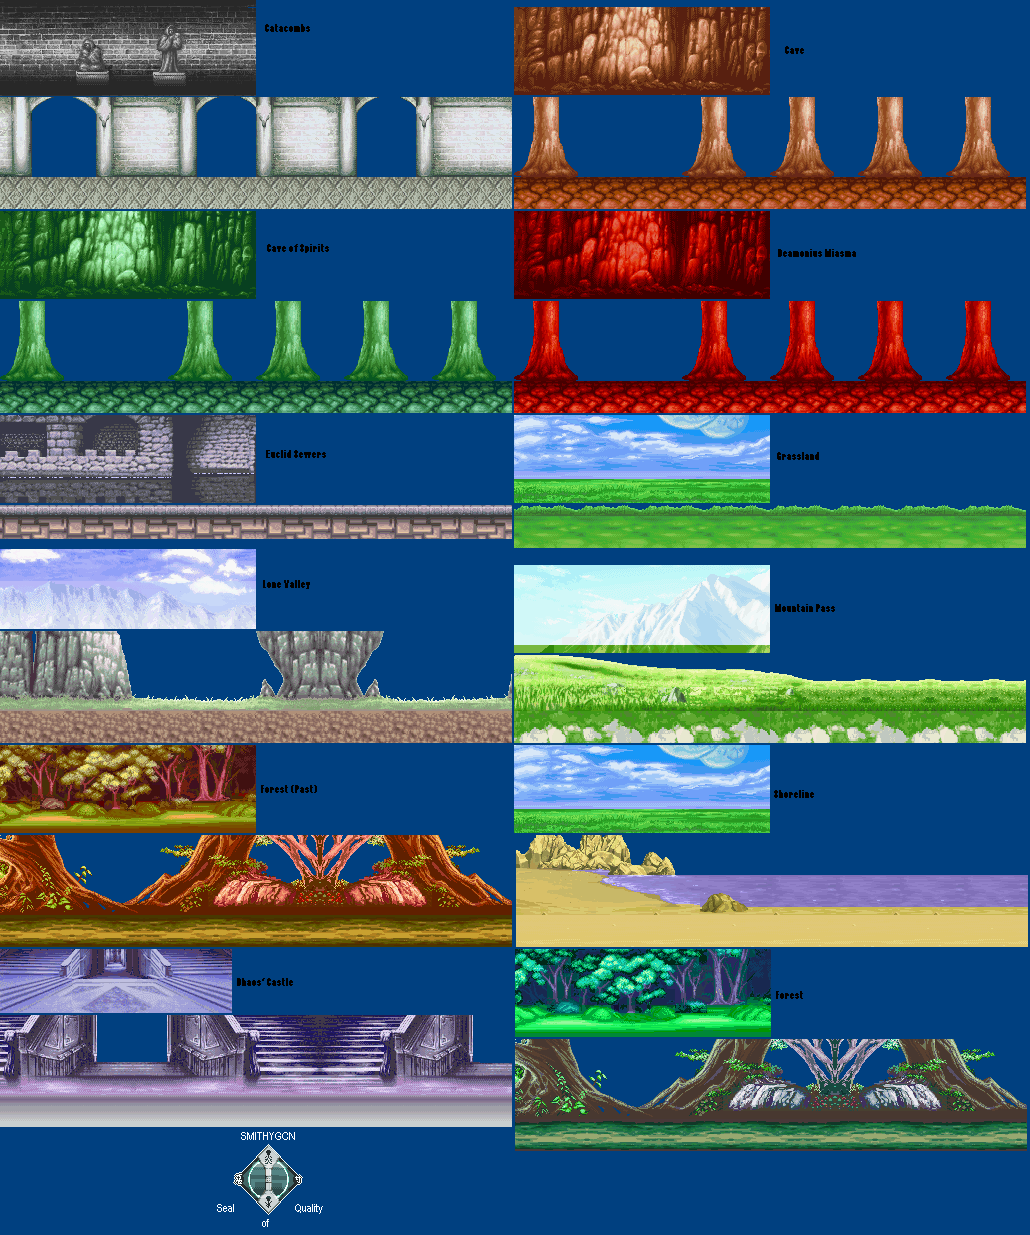 Tales of Phantasia - Battle Backgrounds